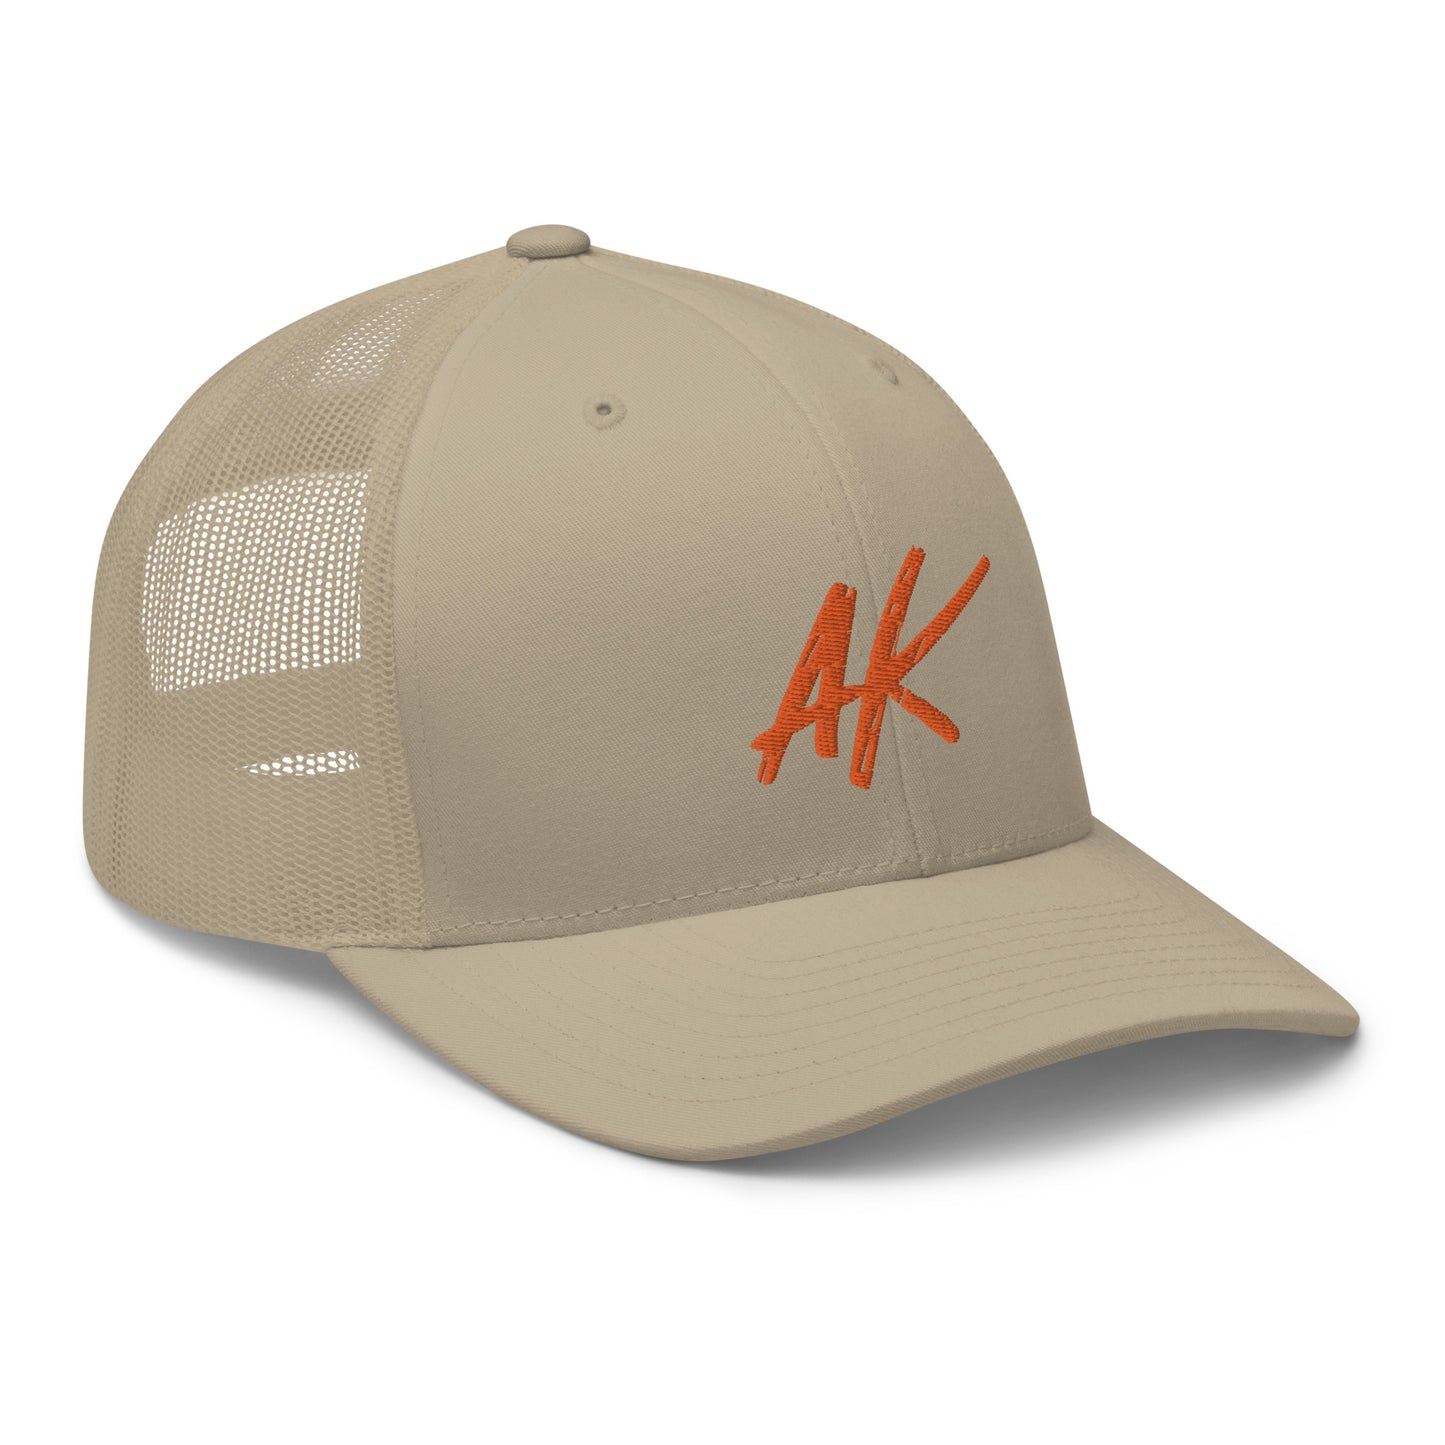 AK snapback (orange)